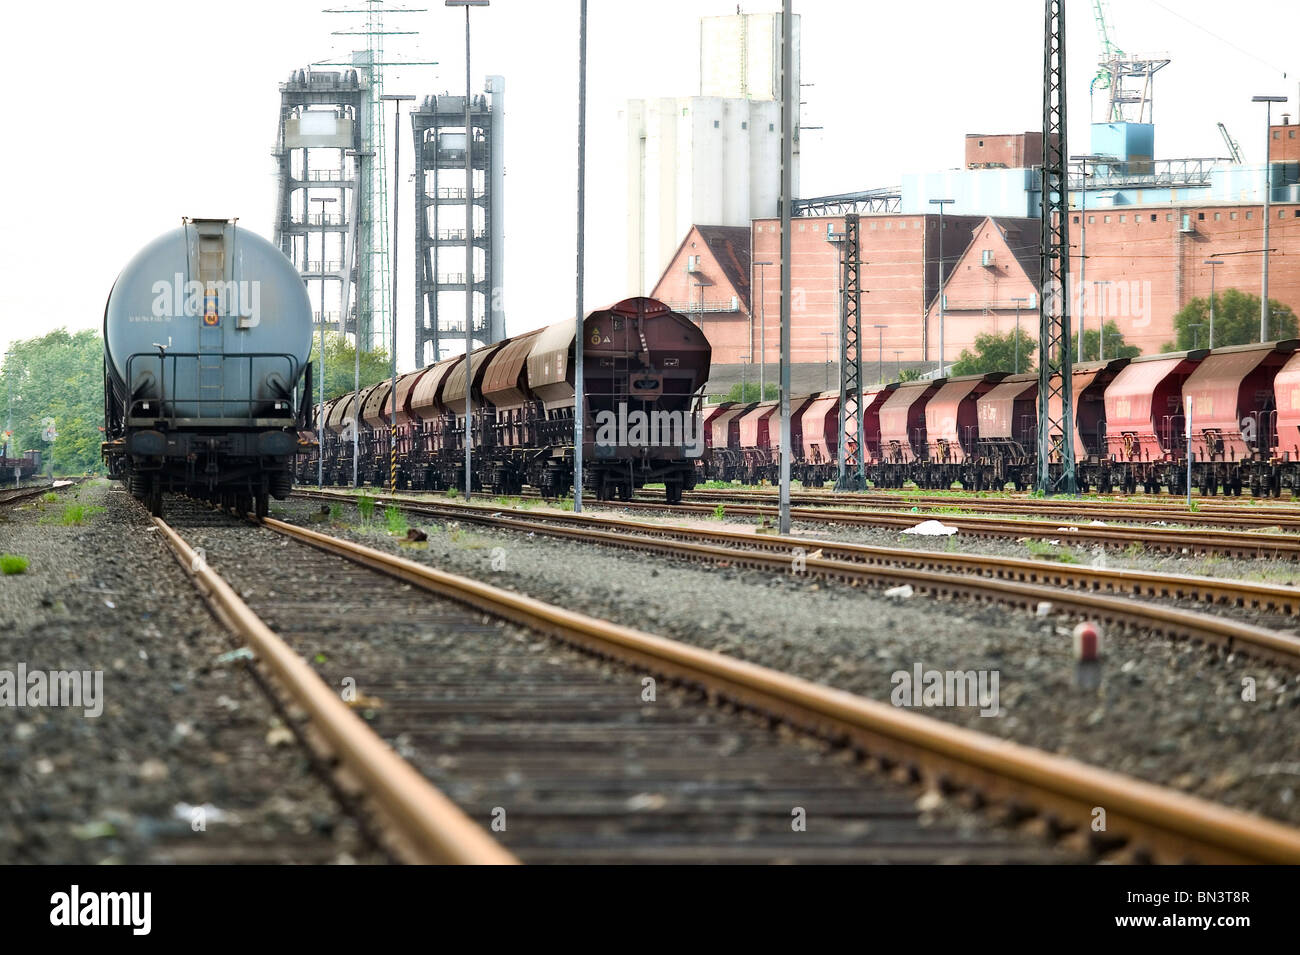 Freight trains on tracks Stock Photo